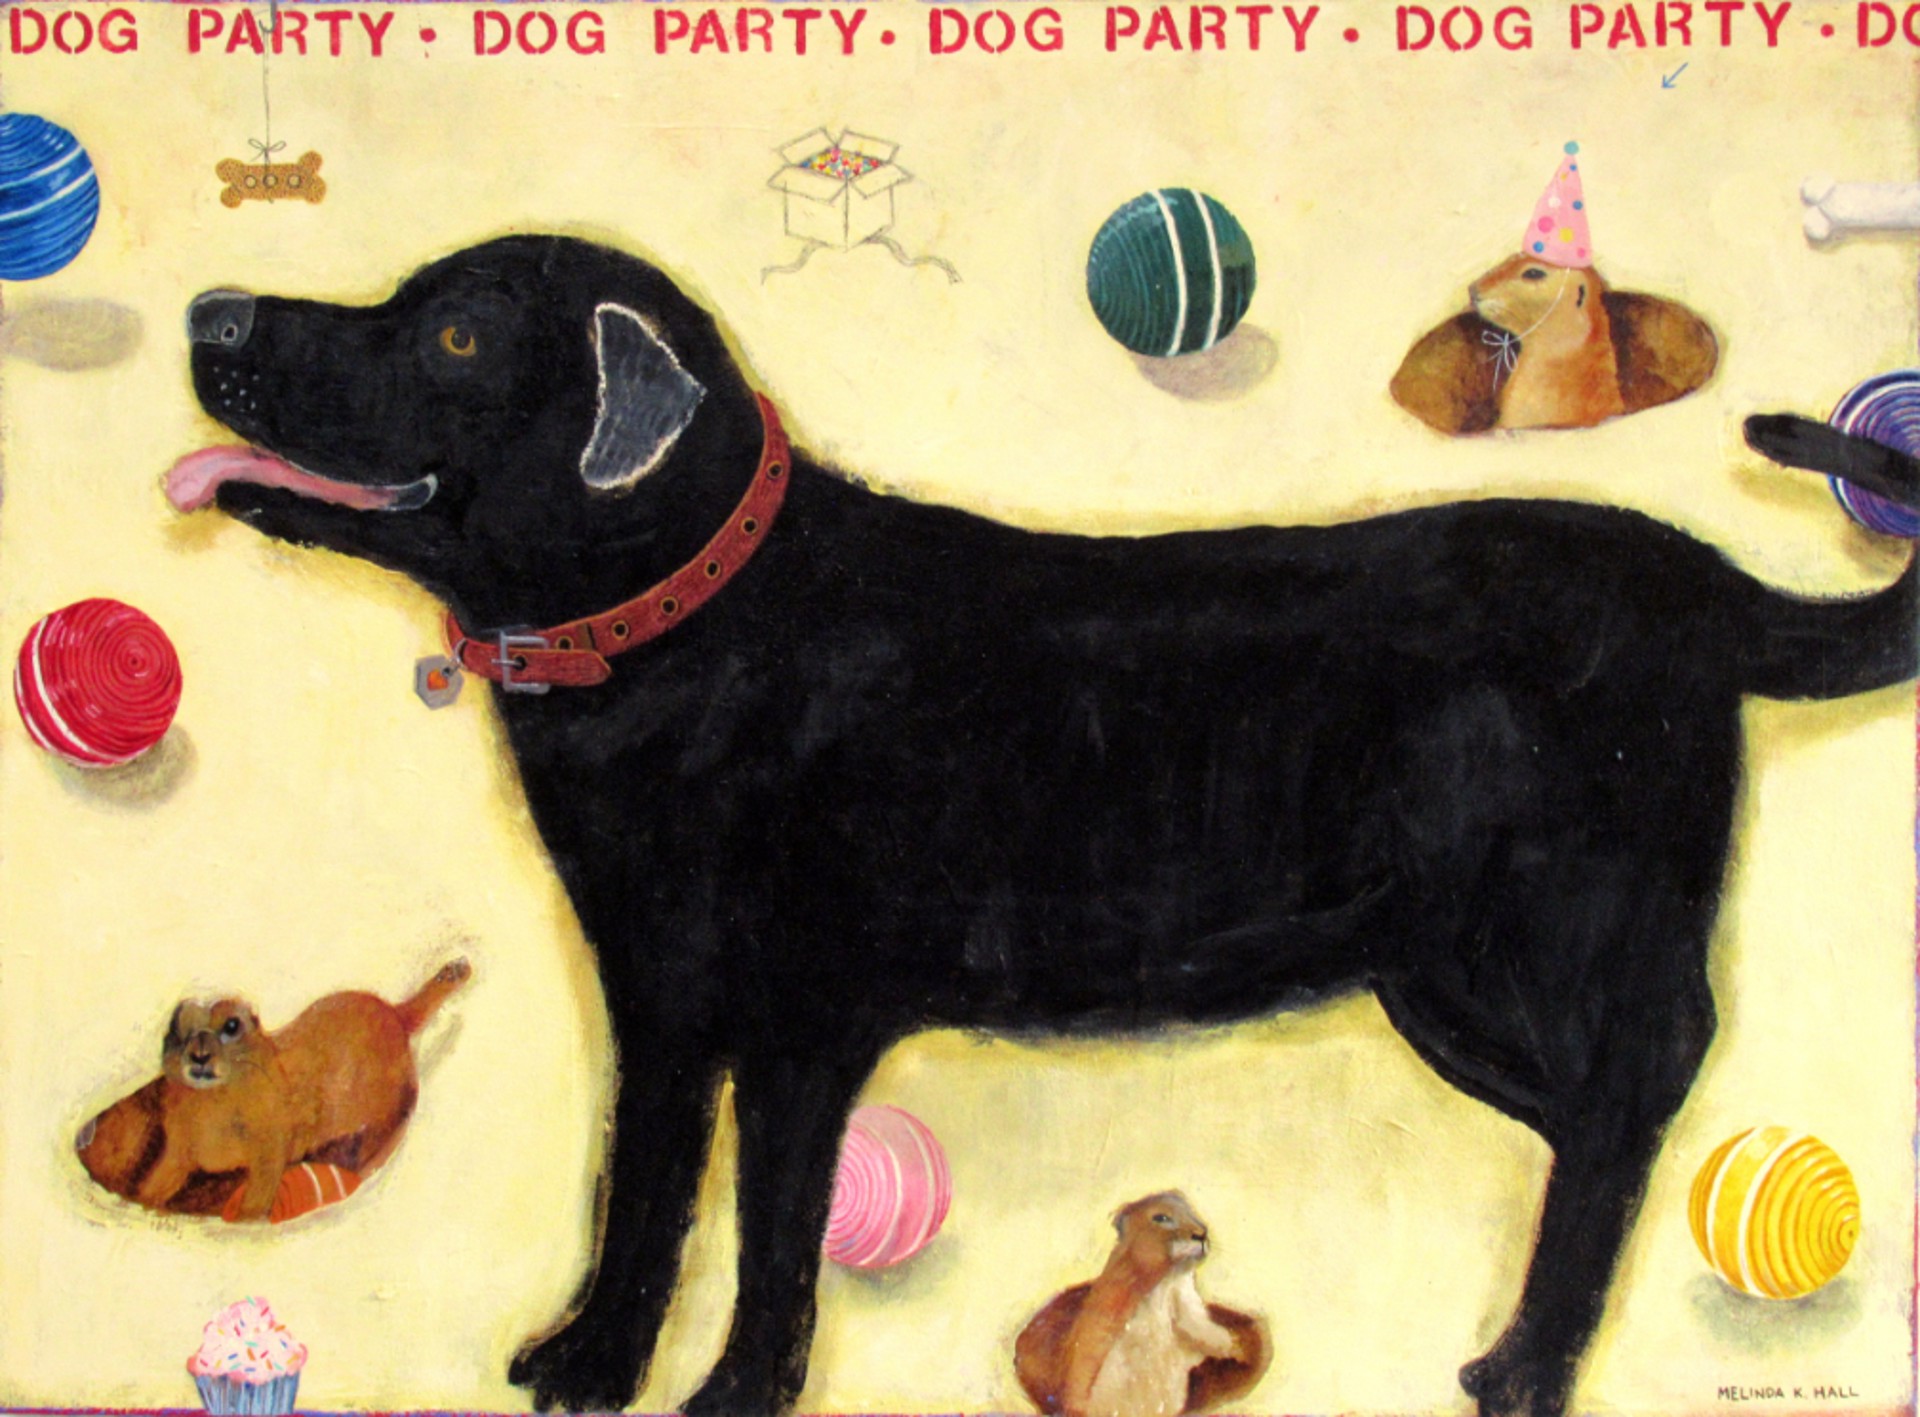 Dog Party by Melinda K. Hall